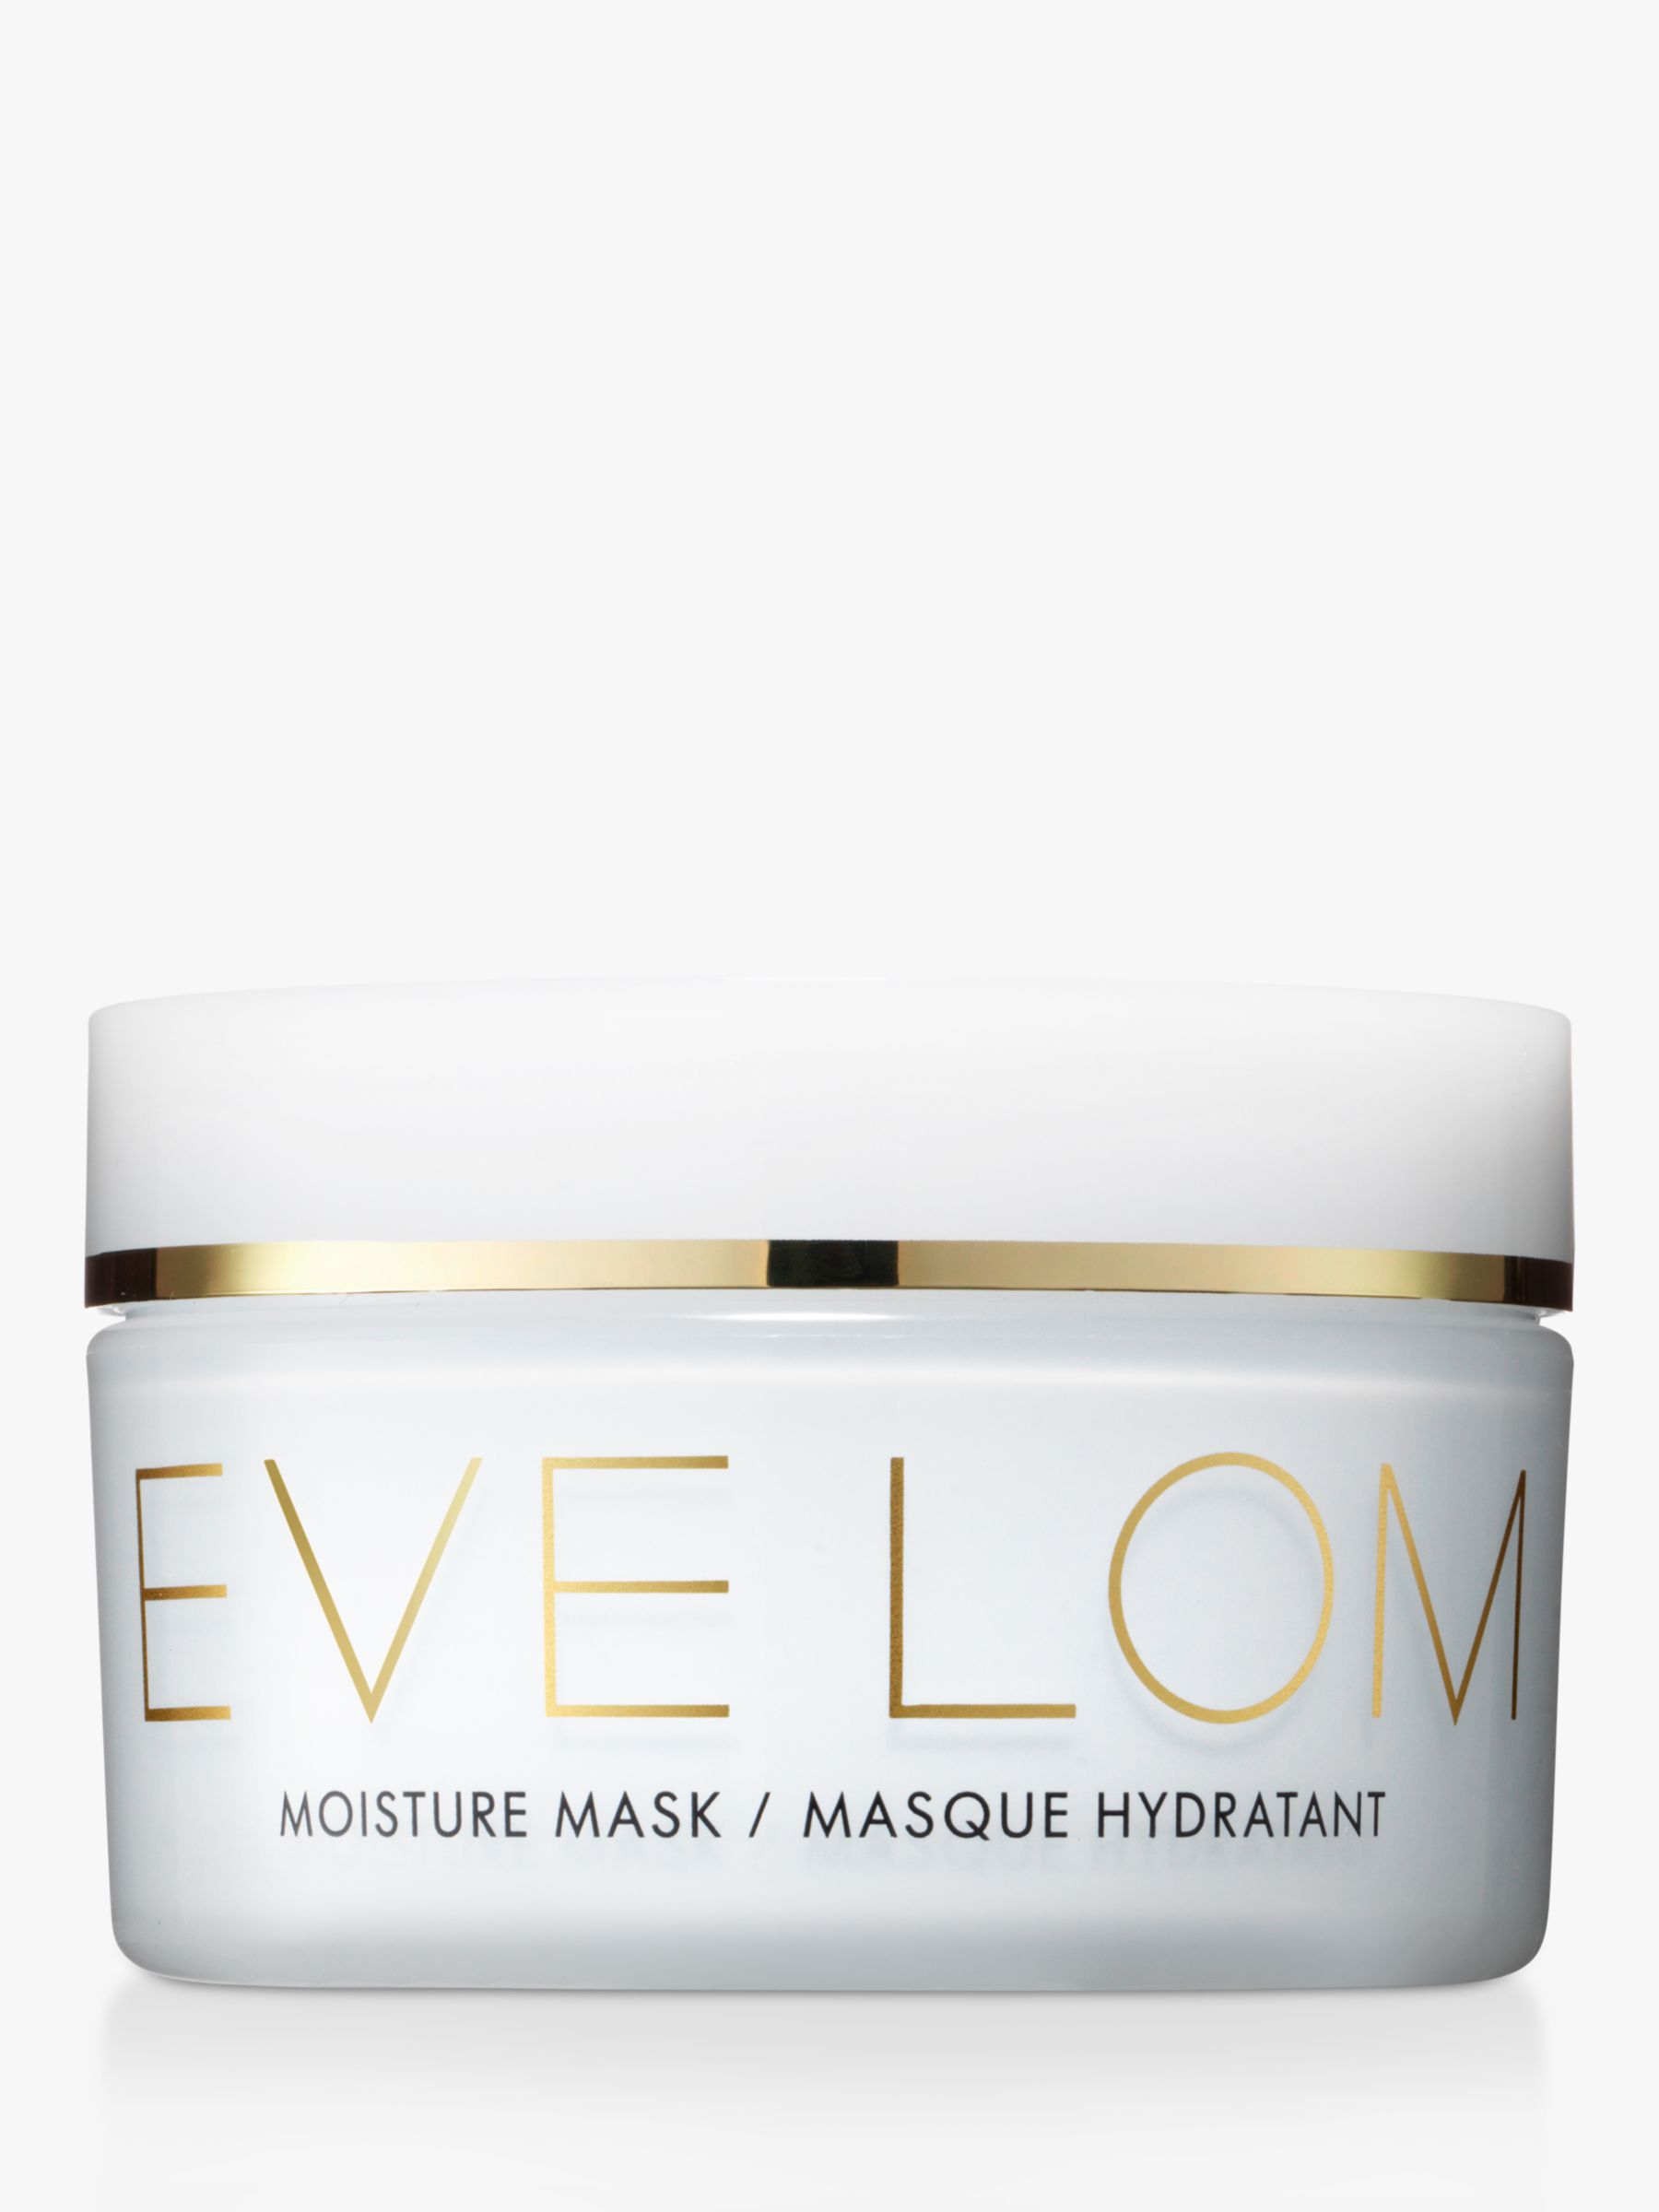 EVE LOM Moisture Mask, 100ml 1